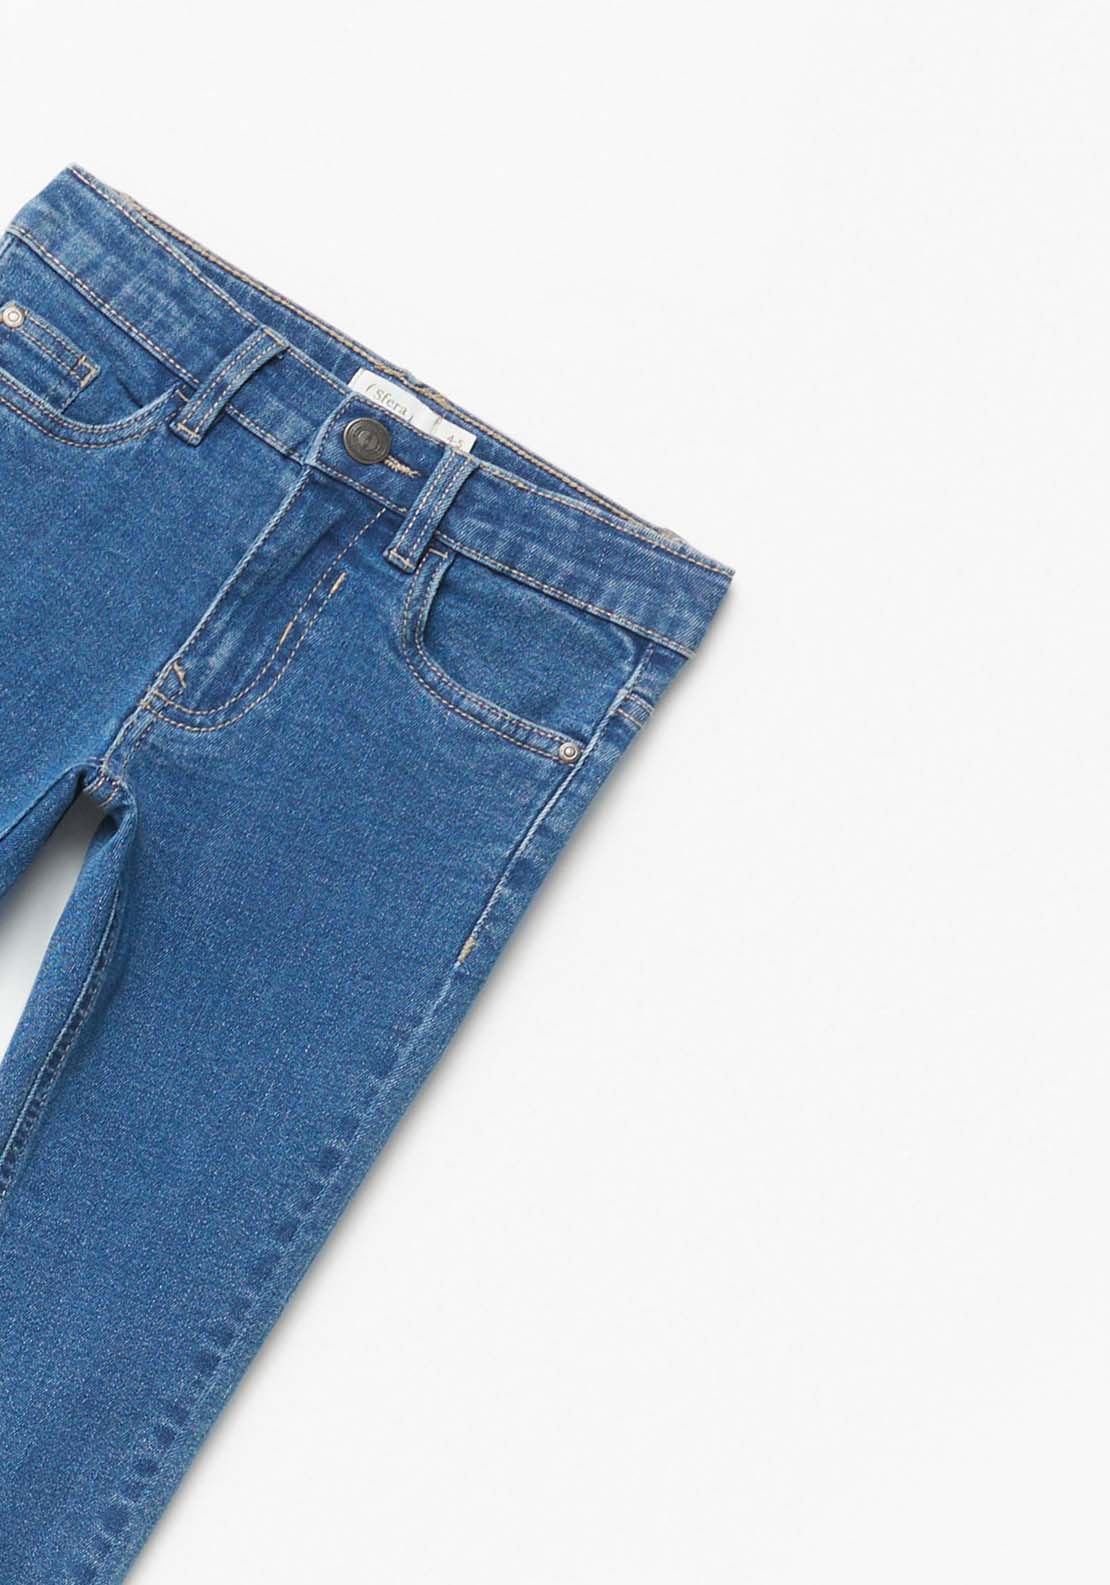 Sfera Denim Jeans - Blue 3 Shaws Department Stores